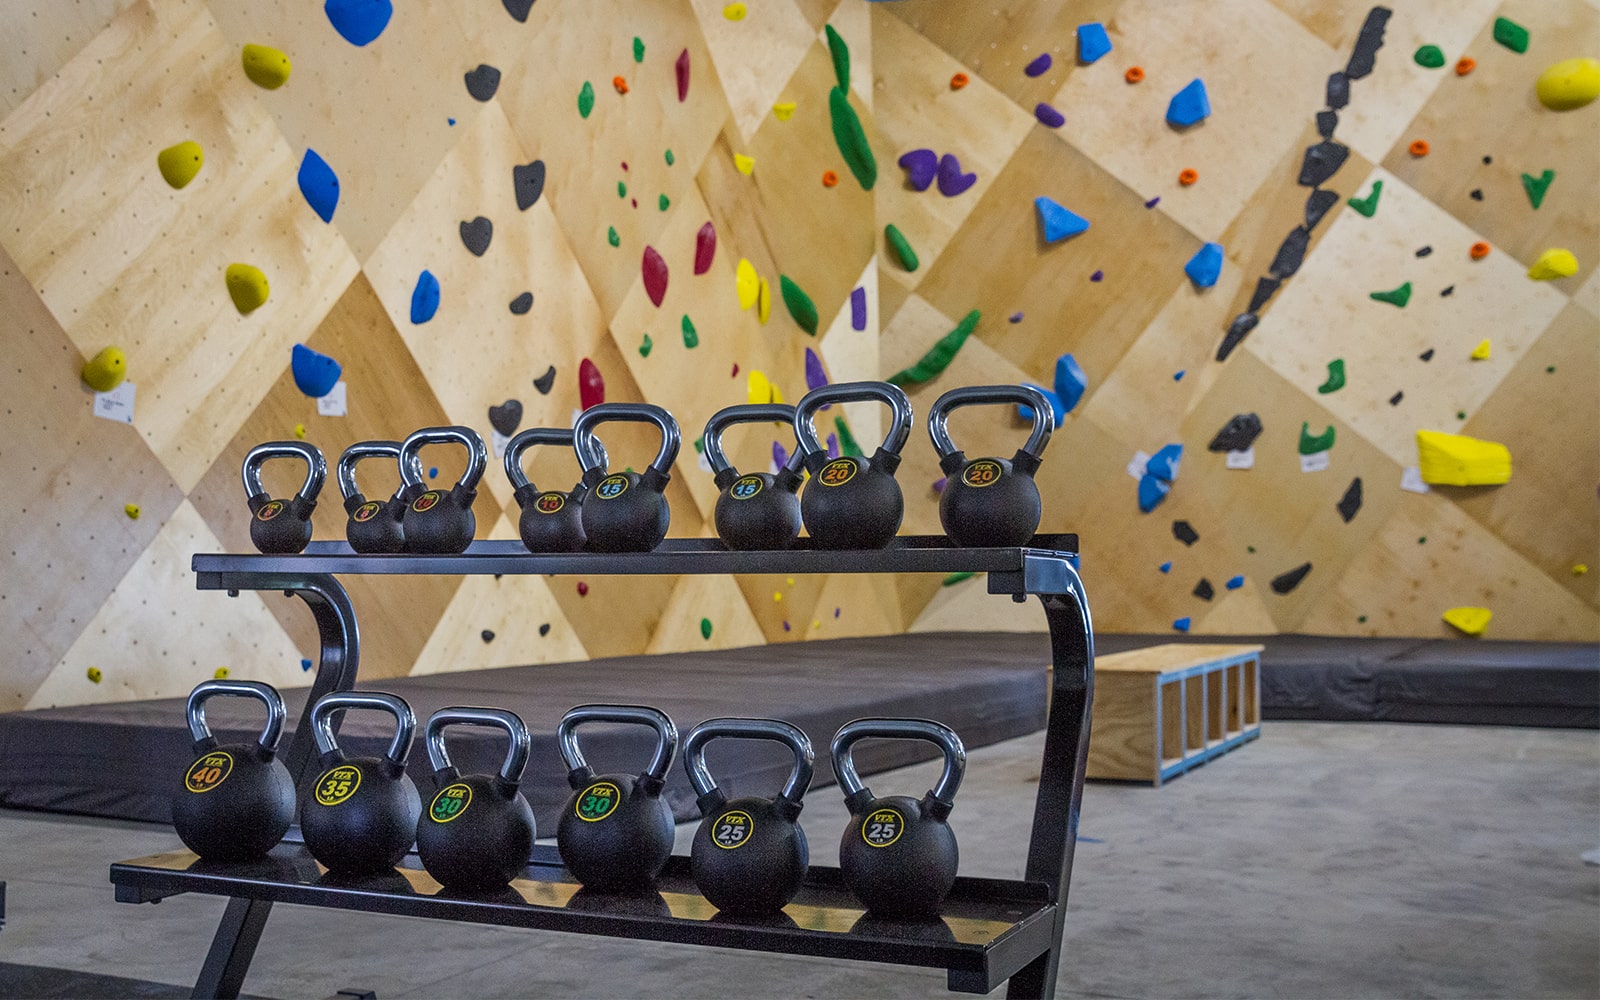 Weights and climbing wall at indoor rock climbing gym